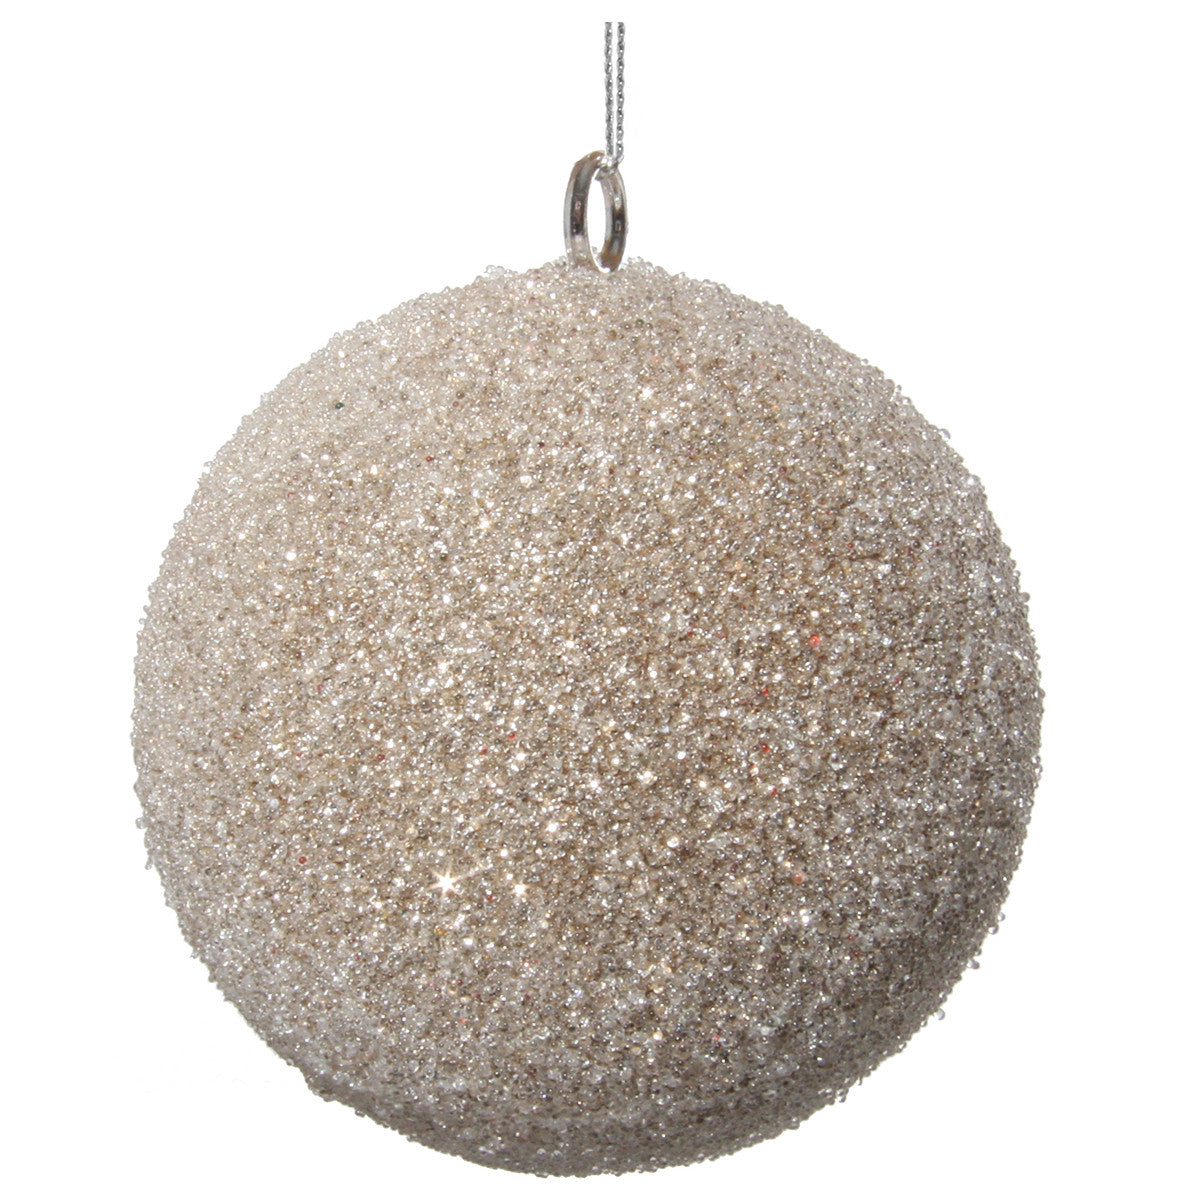 ShiShi Bead ball sand iced 3.15 inches